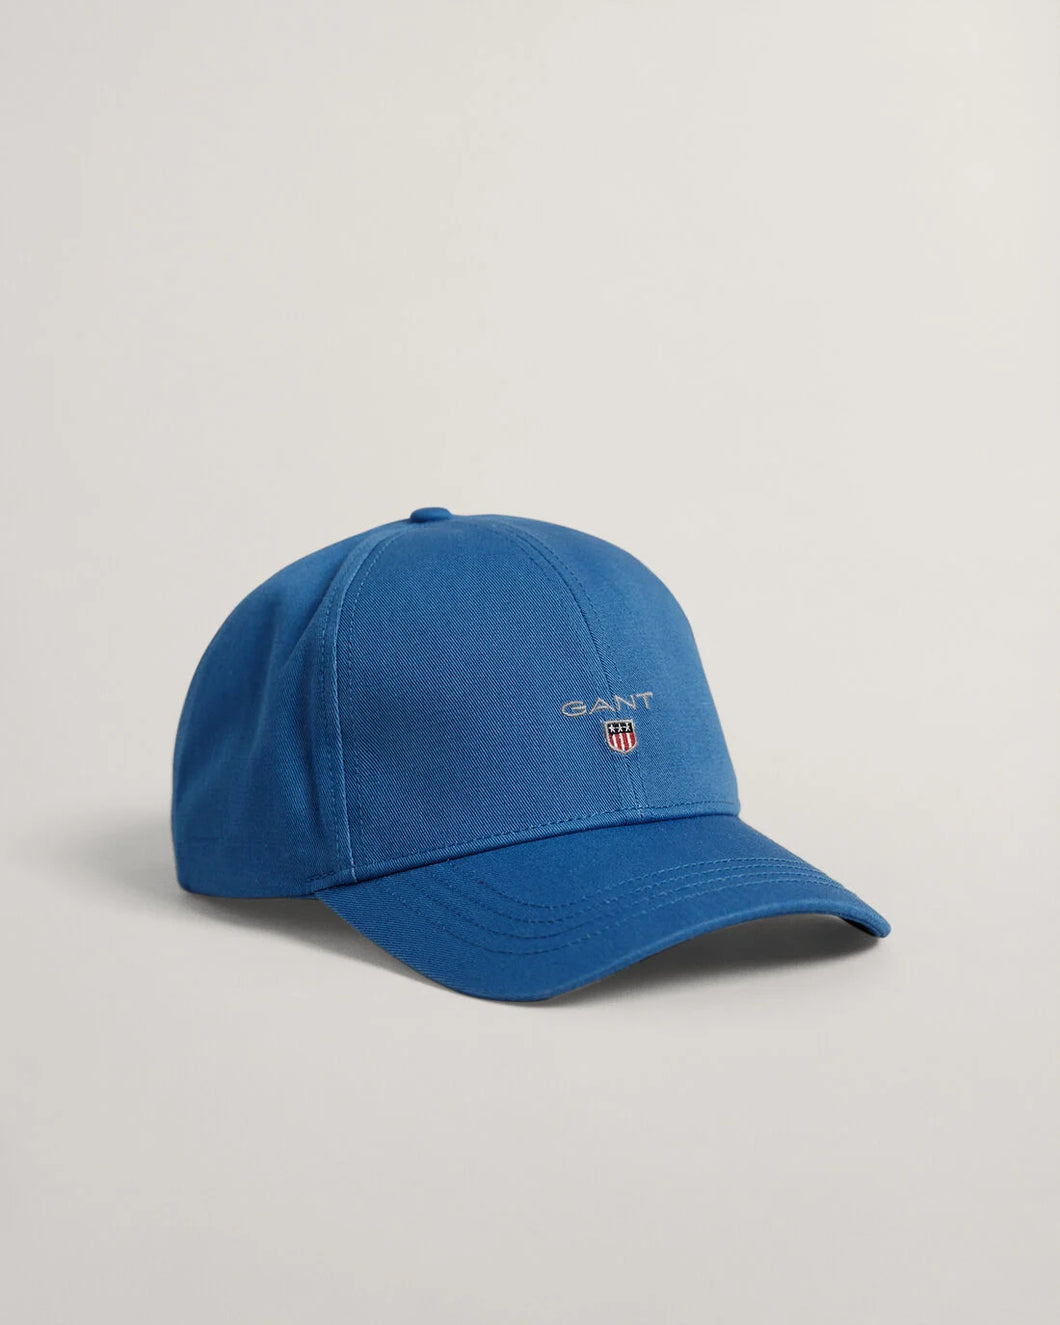 GANT - Cotton Twill Cap, Lapis Blue